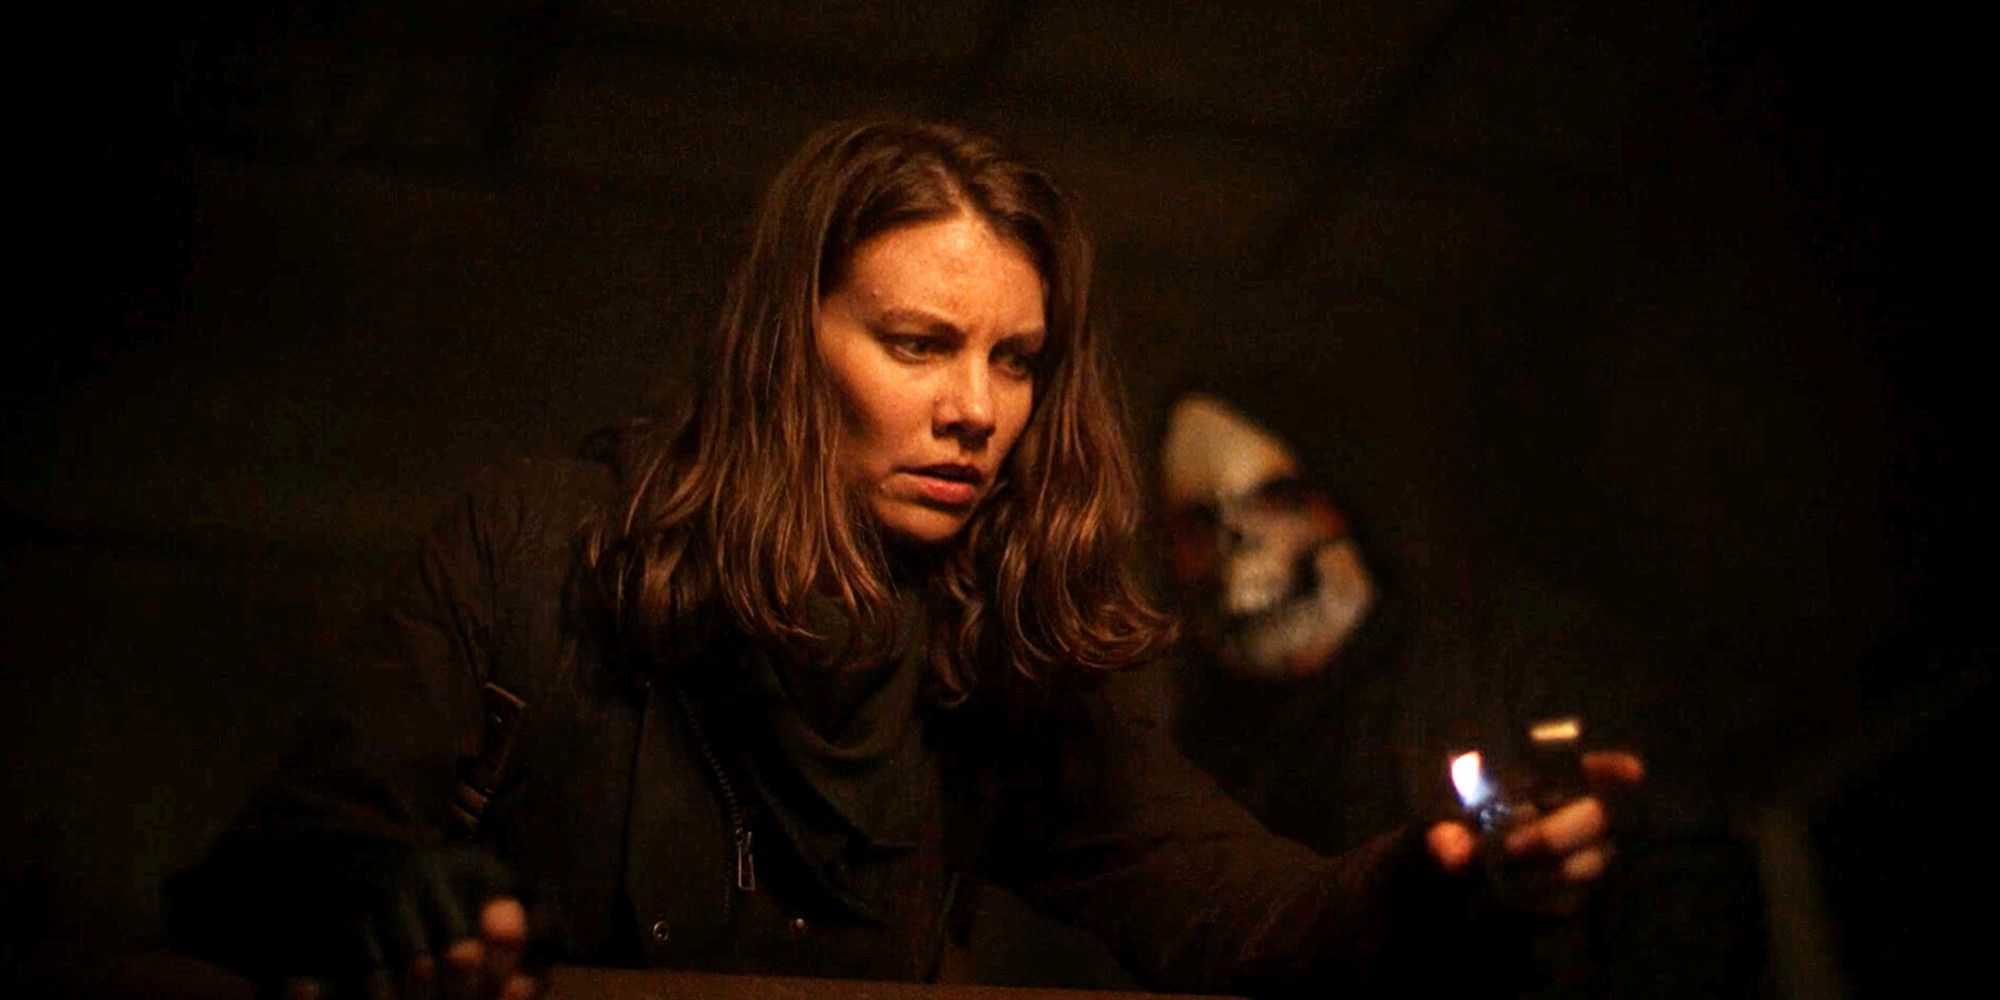 Lauren Cohan as Maggie in The Walking Dead being hunted